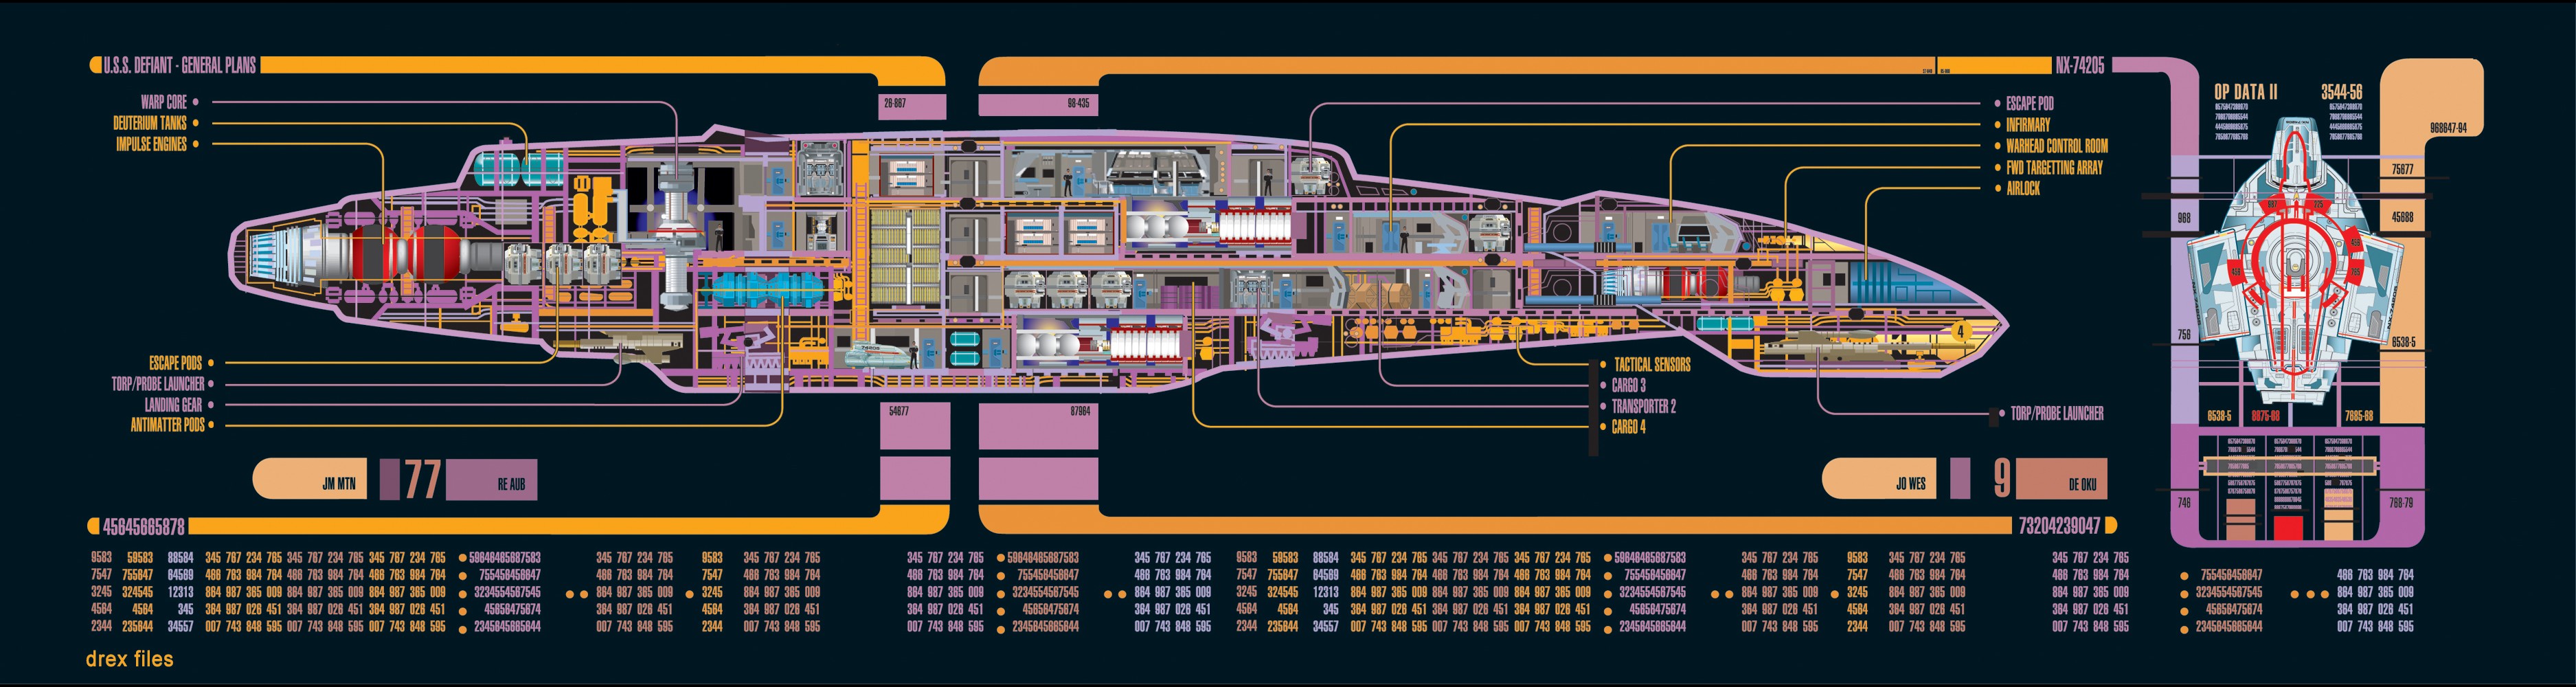 star, Trek, Starship, Defiant, Spaceship Wallpaper